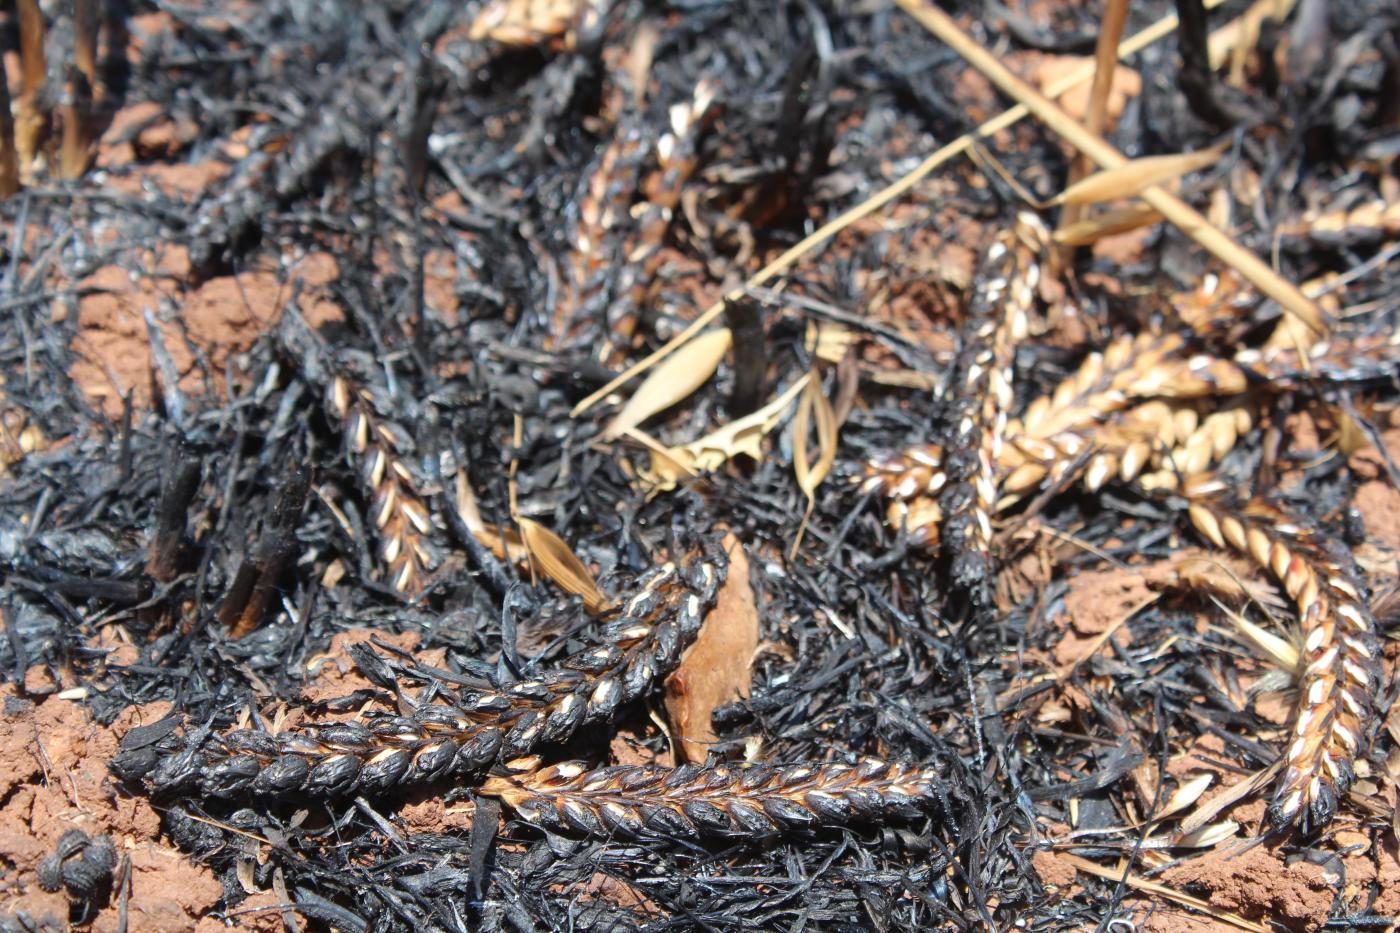 Torched crops in fields set ablaze by Israeli settlers